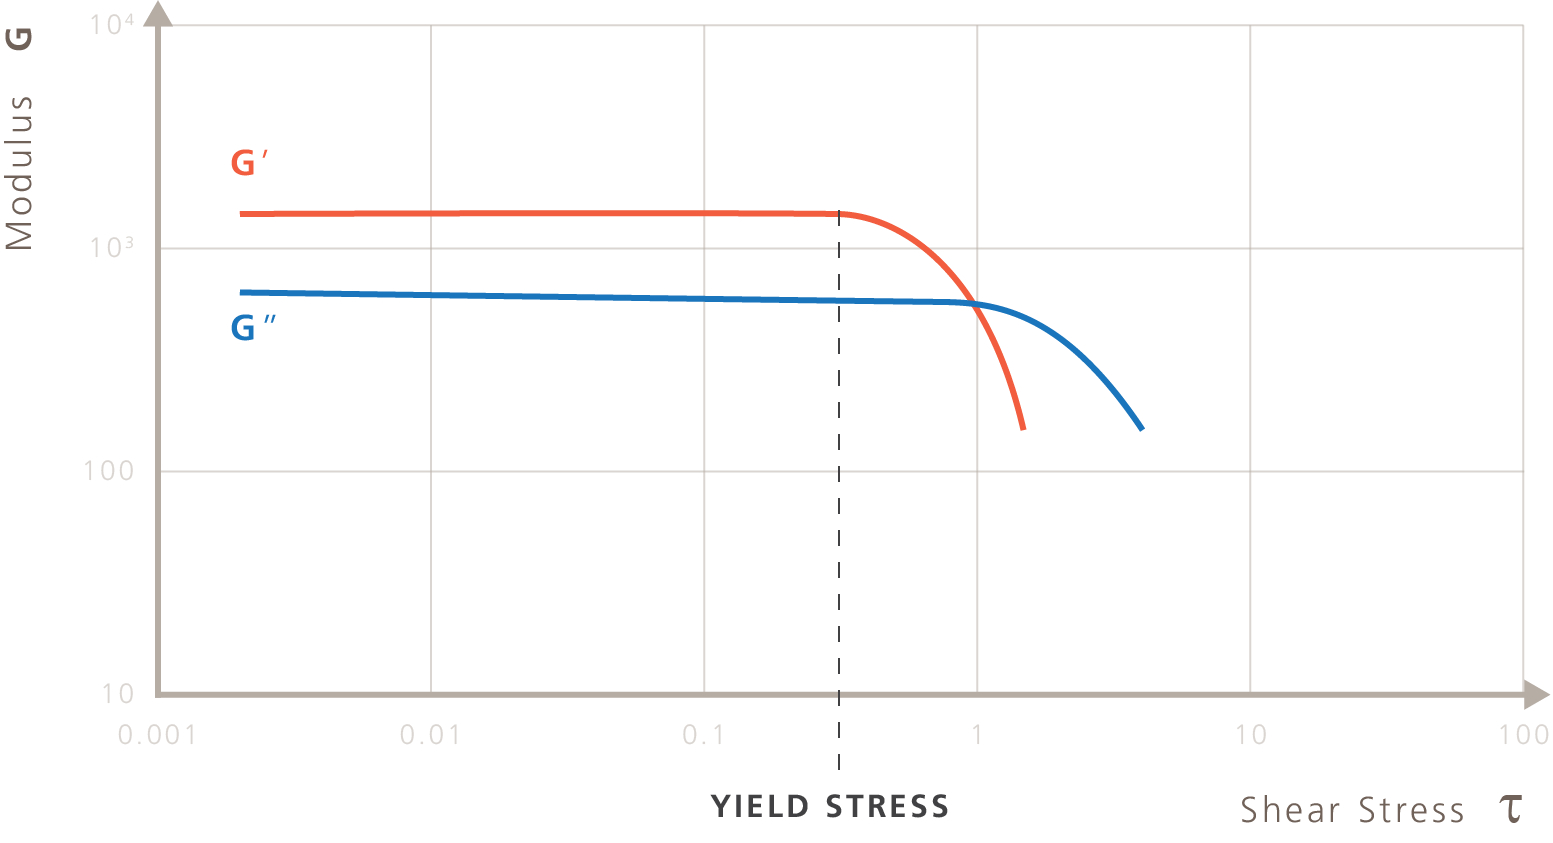 Figure-1-yield-stress-viscoelastic-material